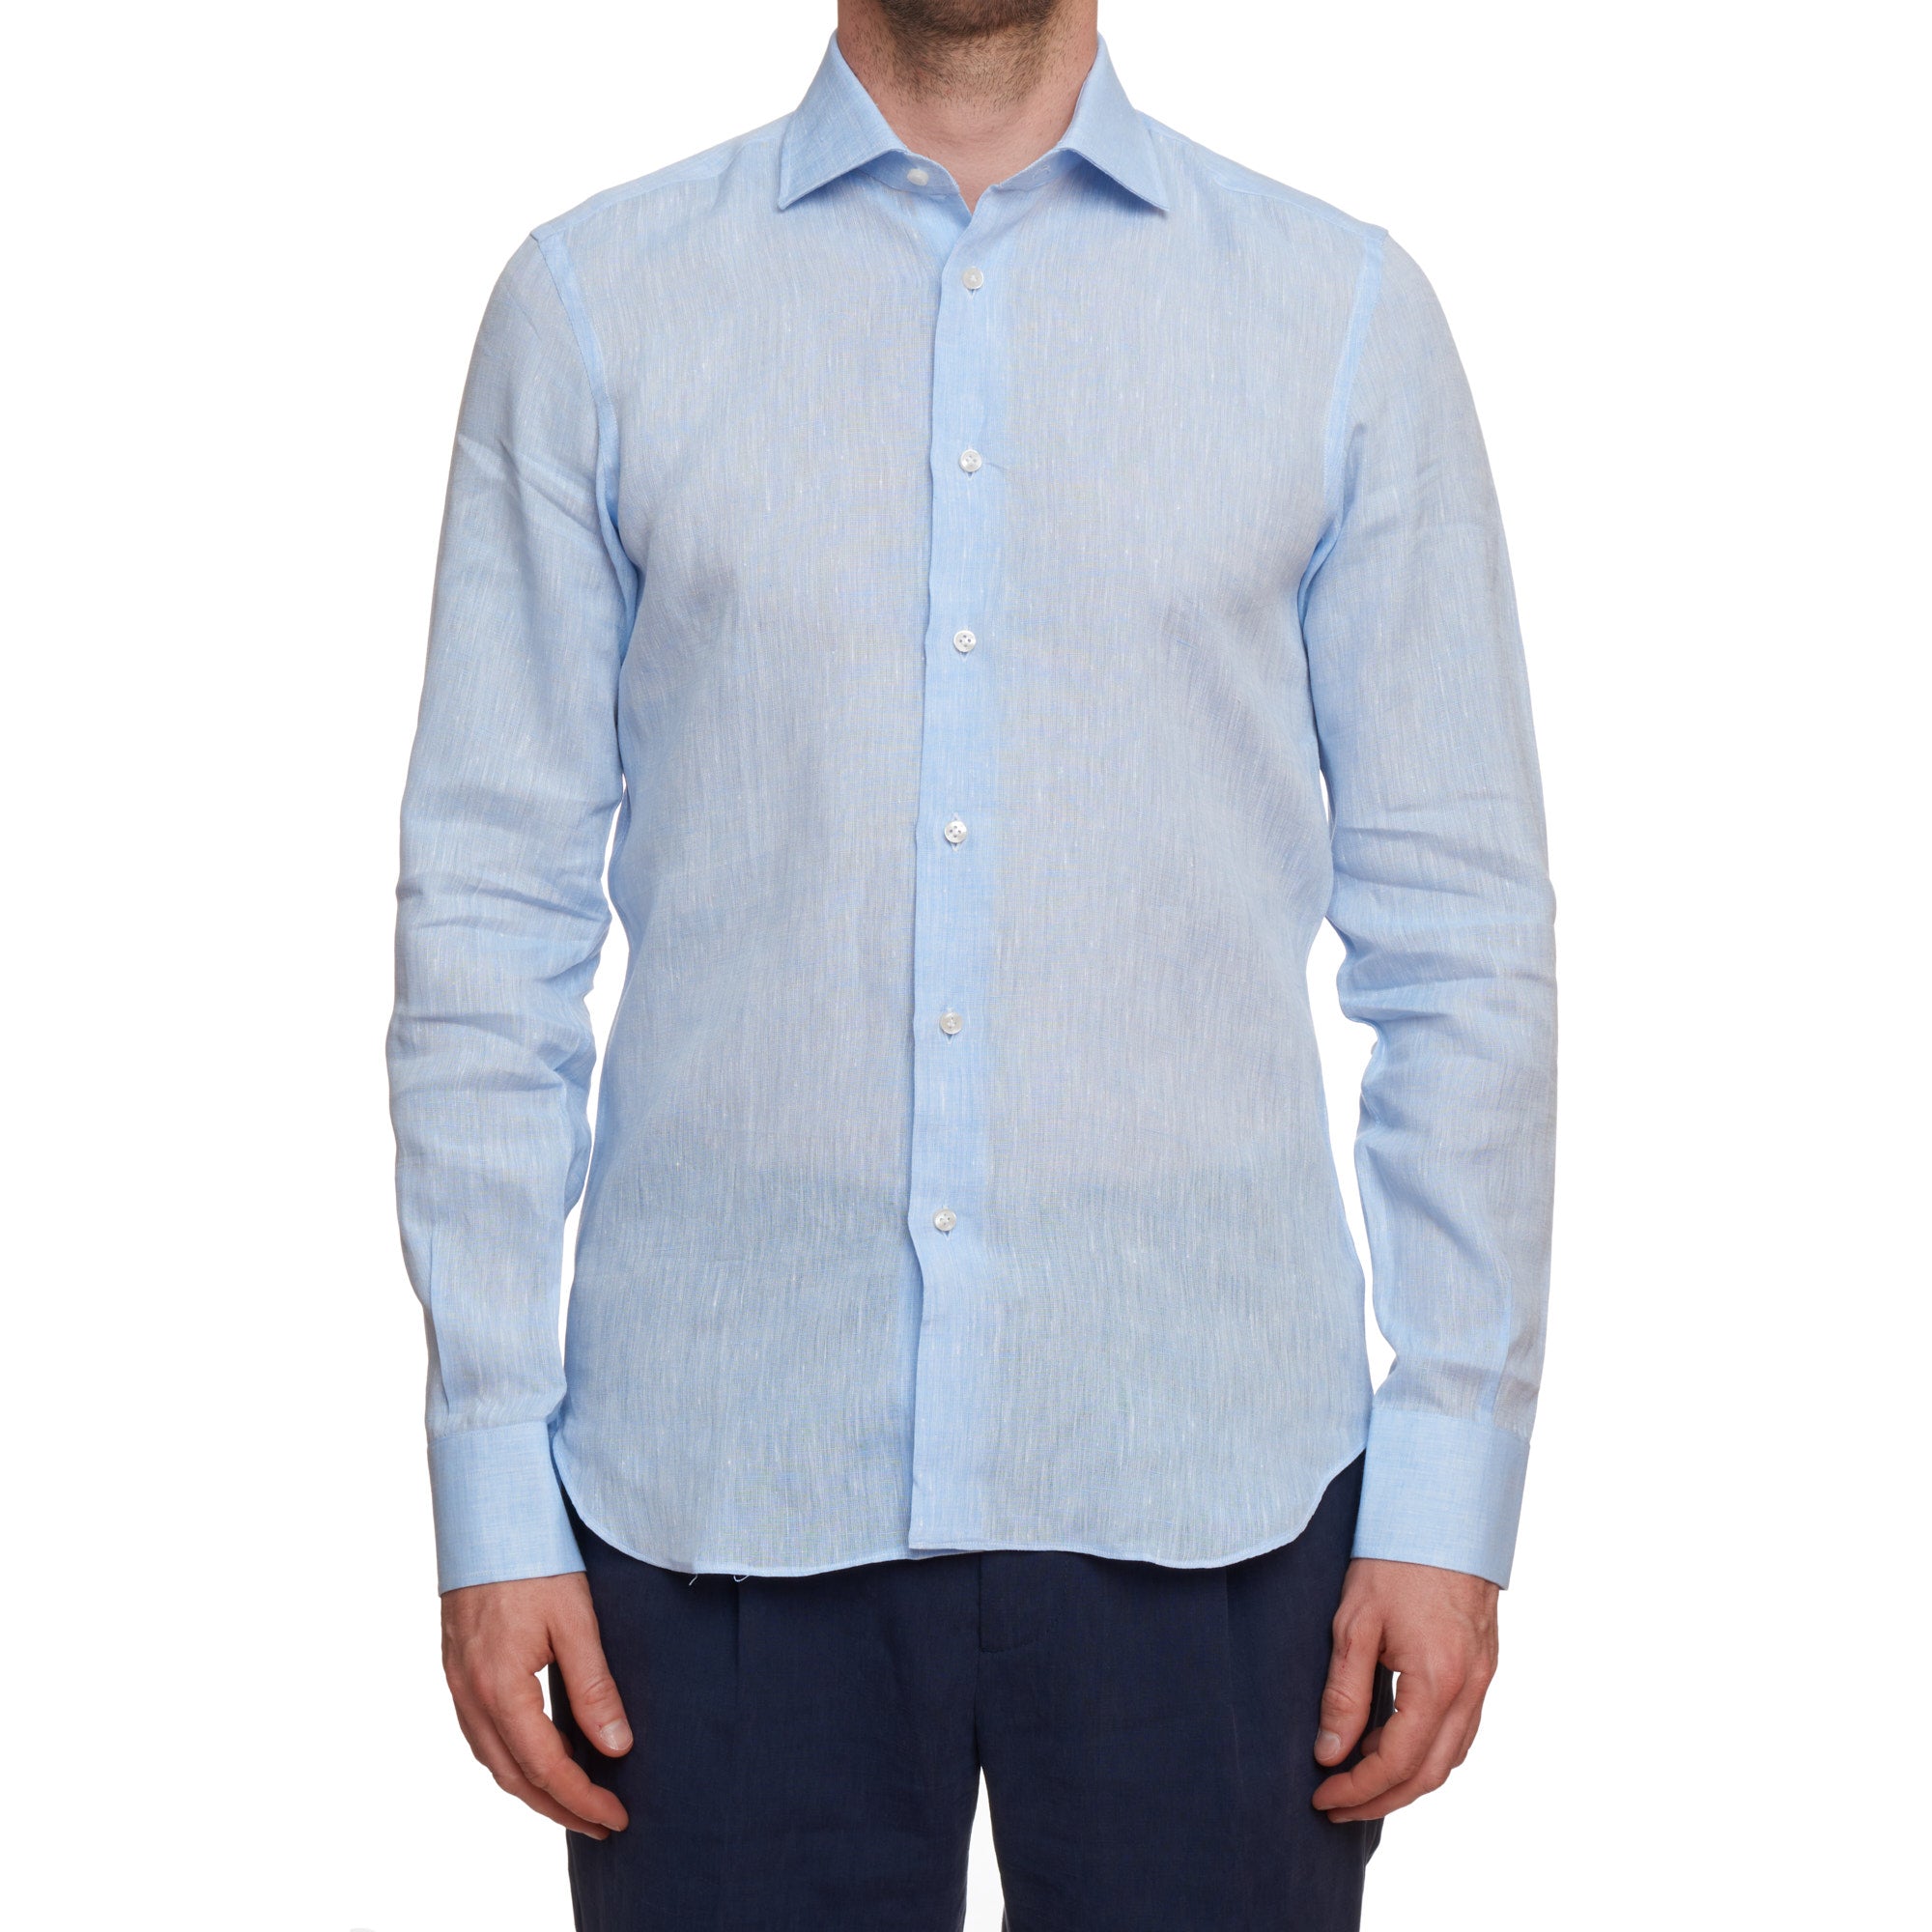 SARTORIO Napoli by KITON Light Blue Linen Spread Collar Shirt Slim Fit NEW